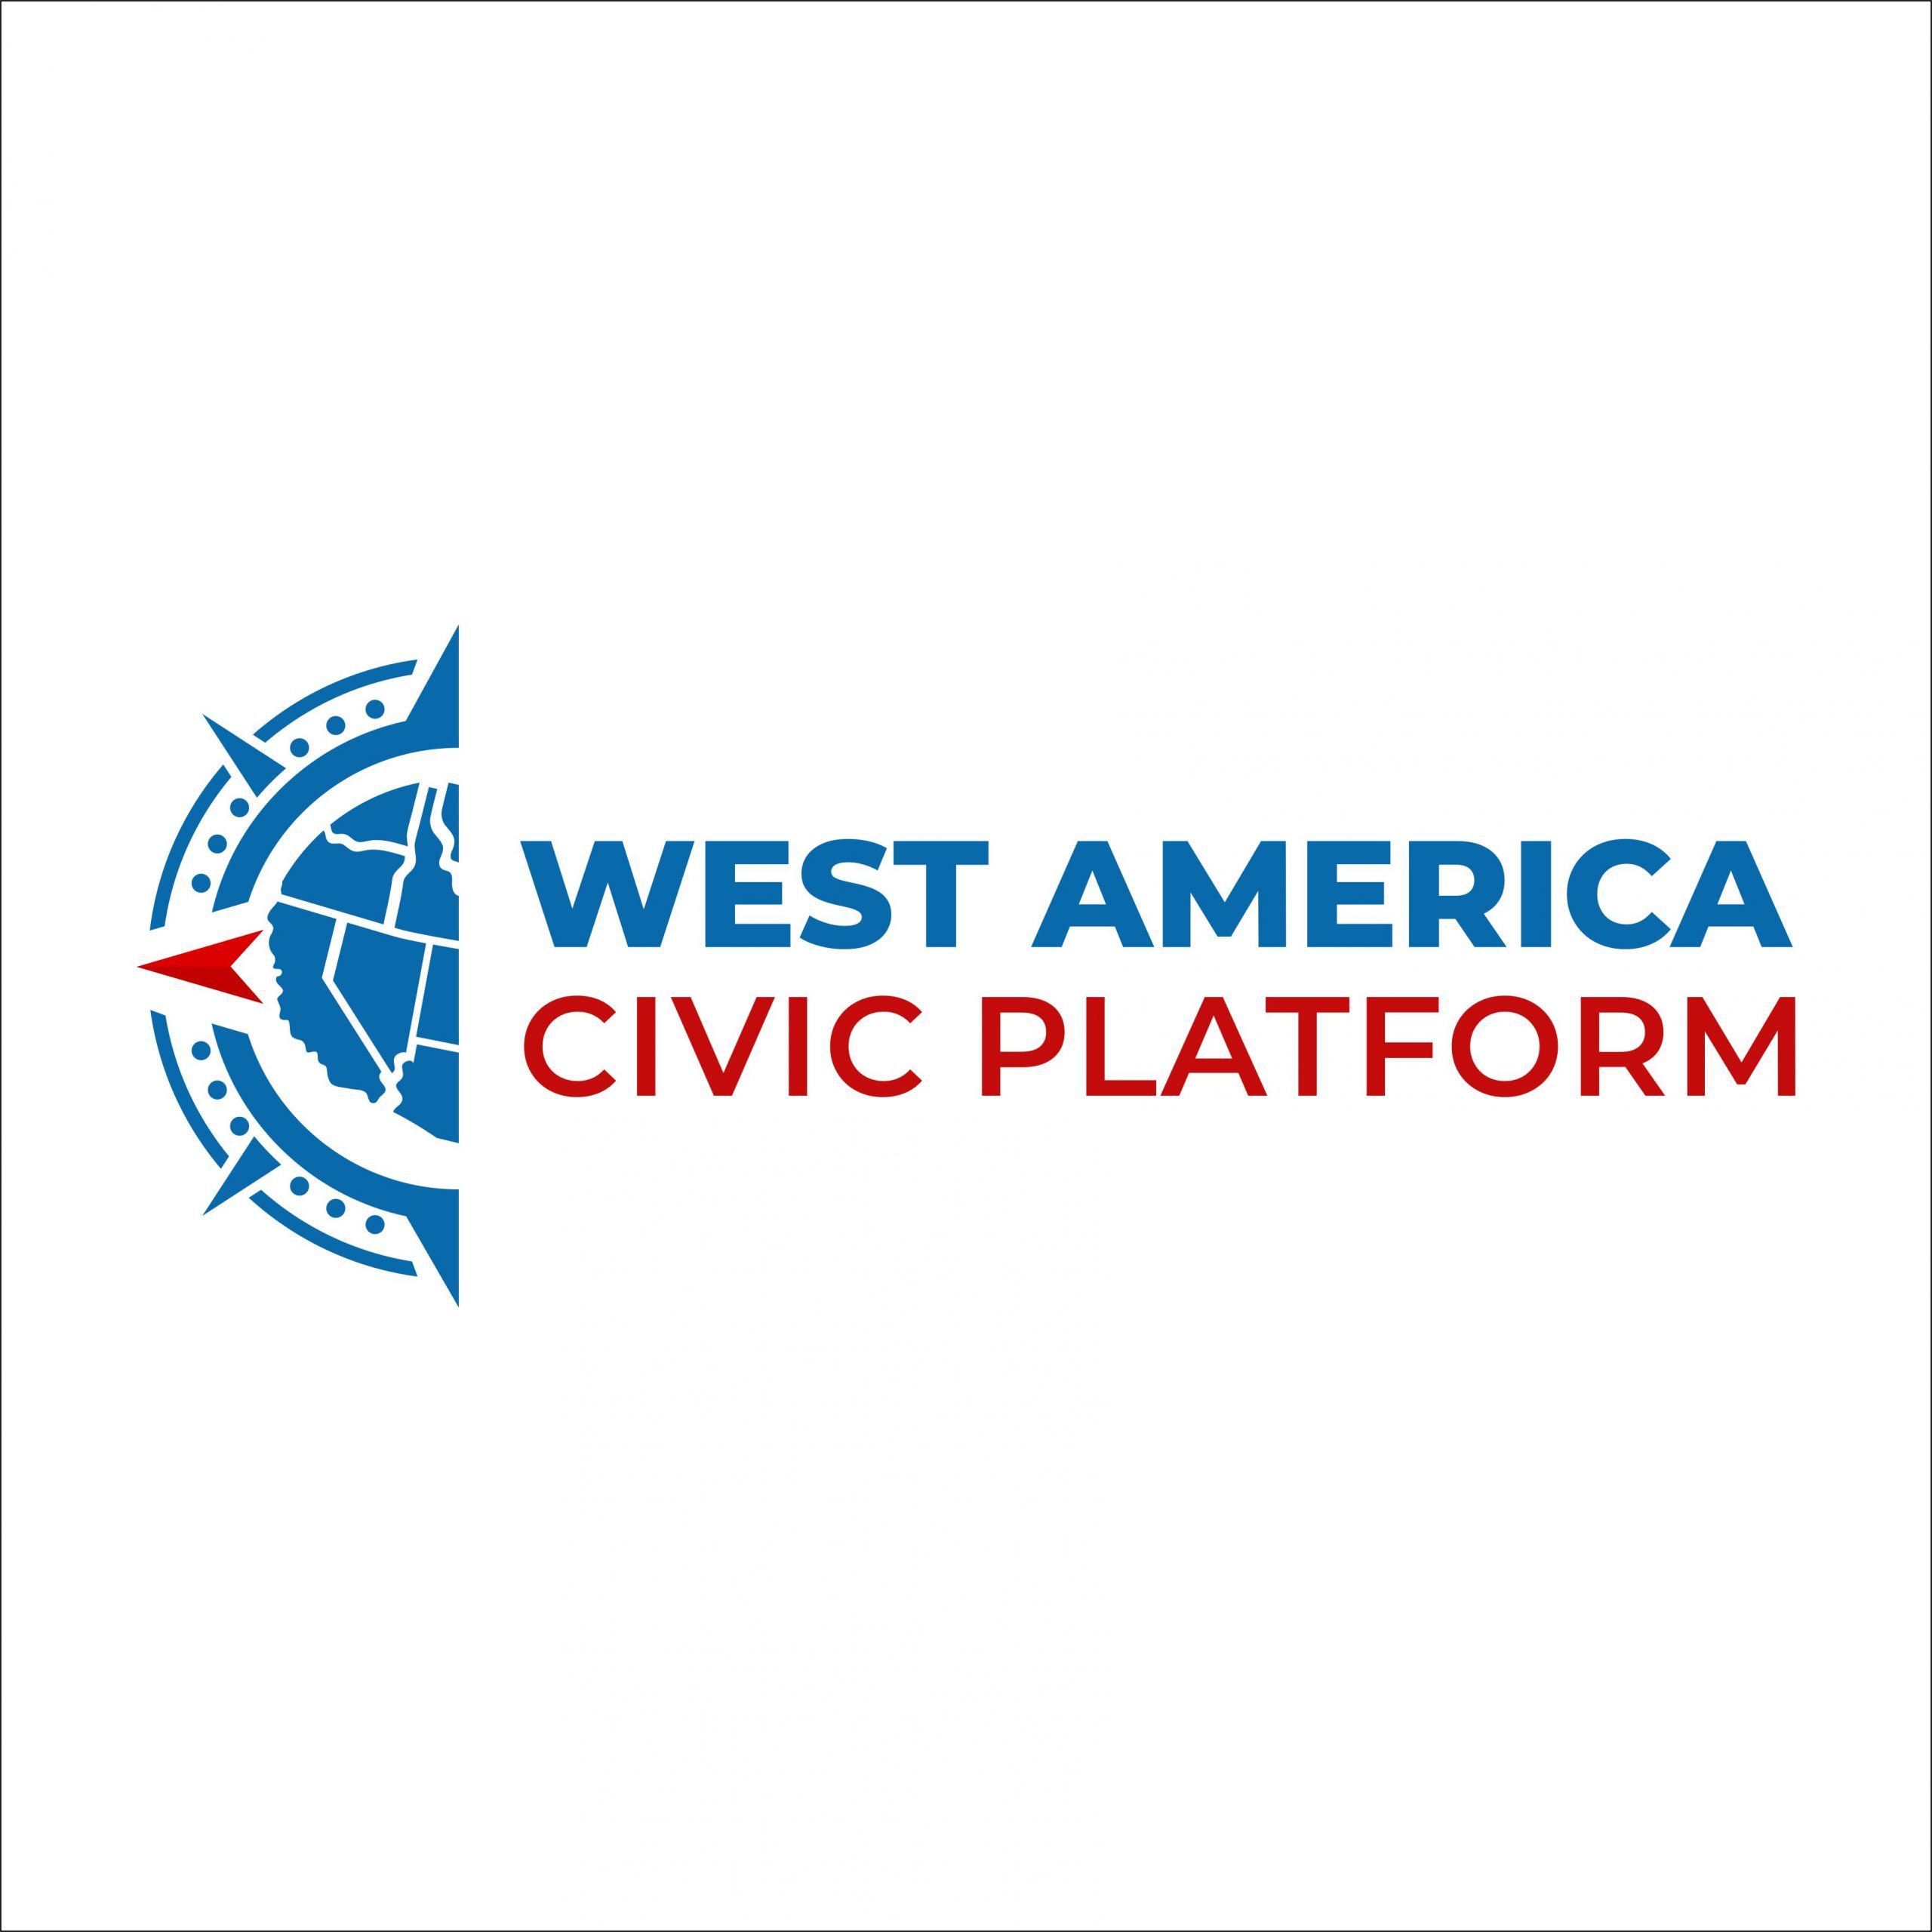 West America Civic Platform